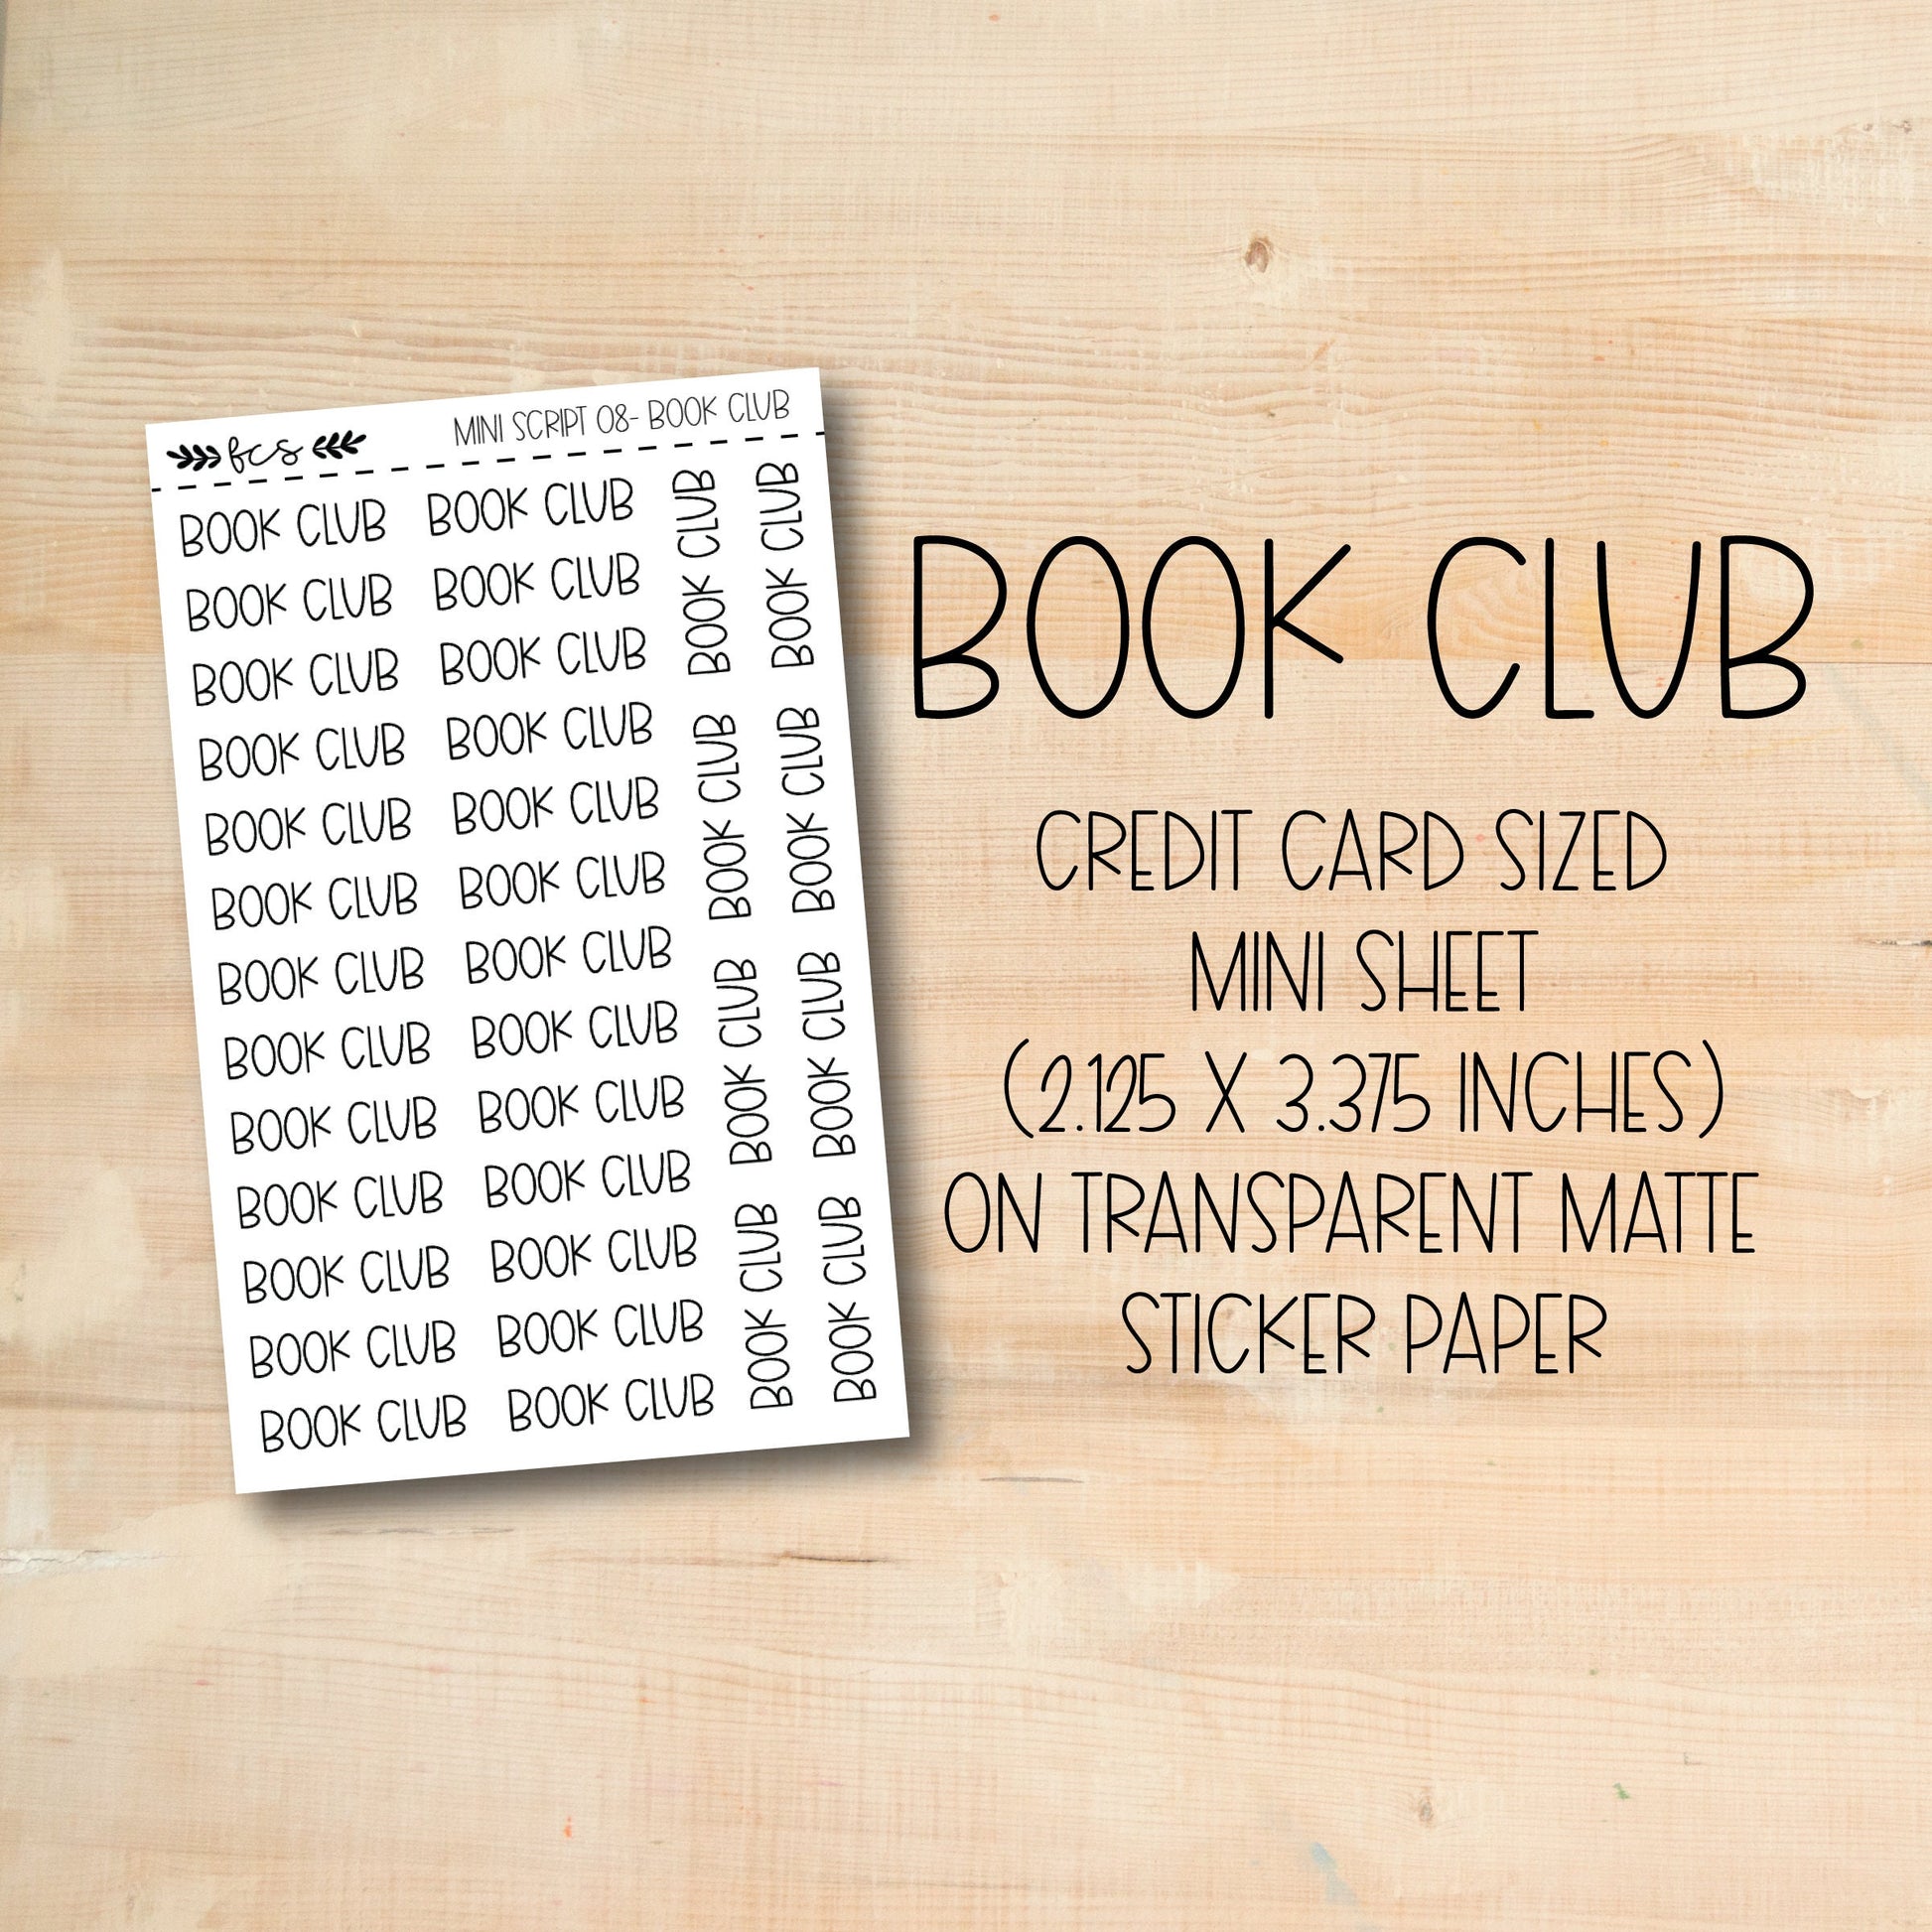 a book club card sized mini sheet with a transparent matte sticker